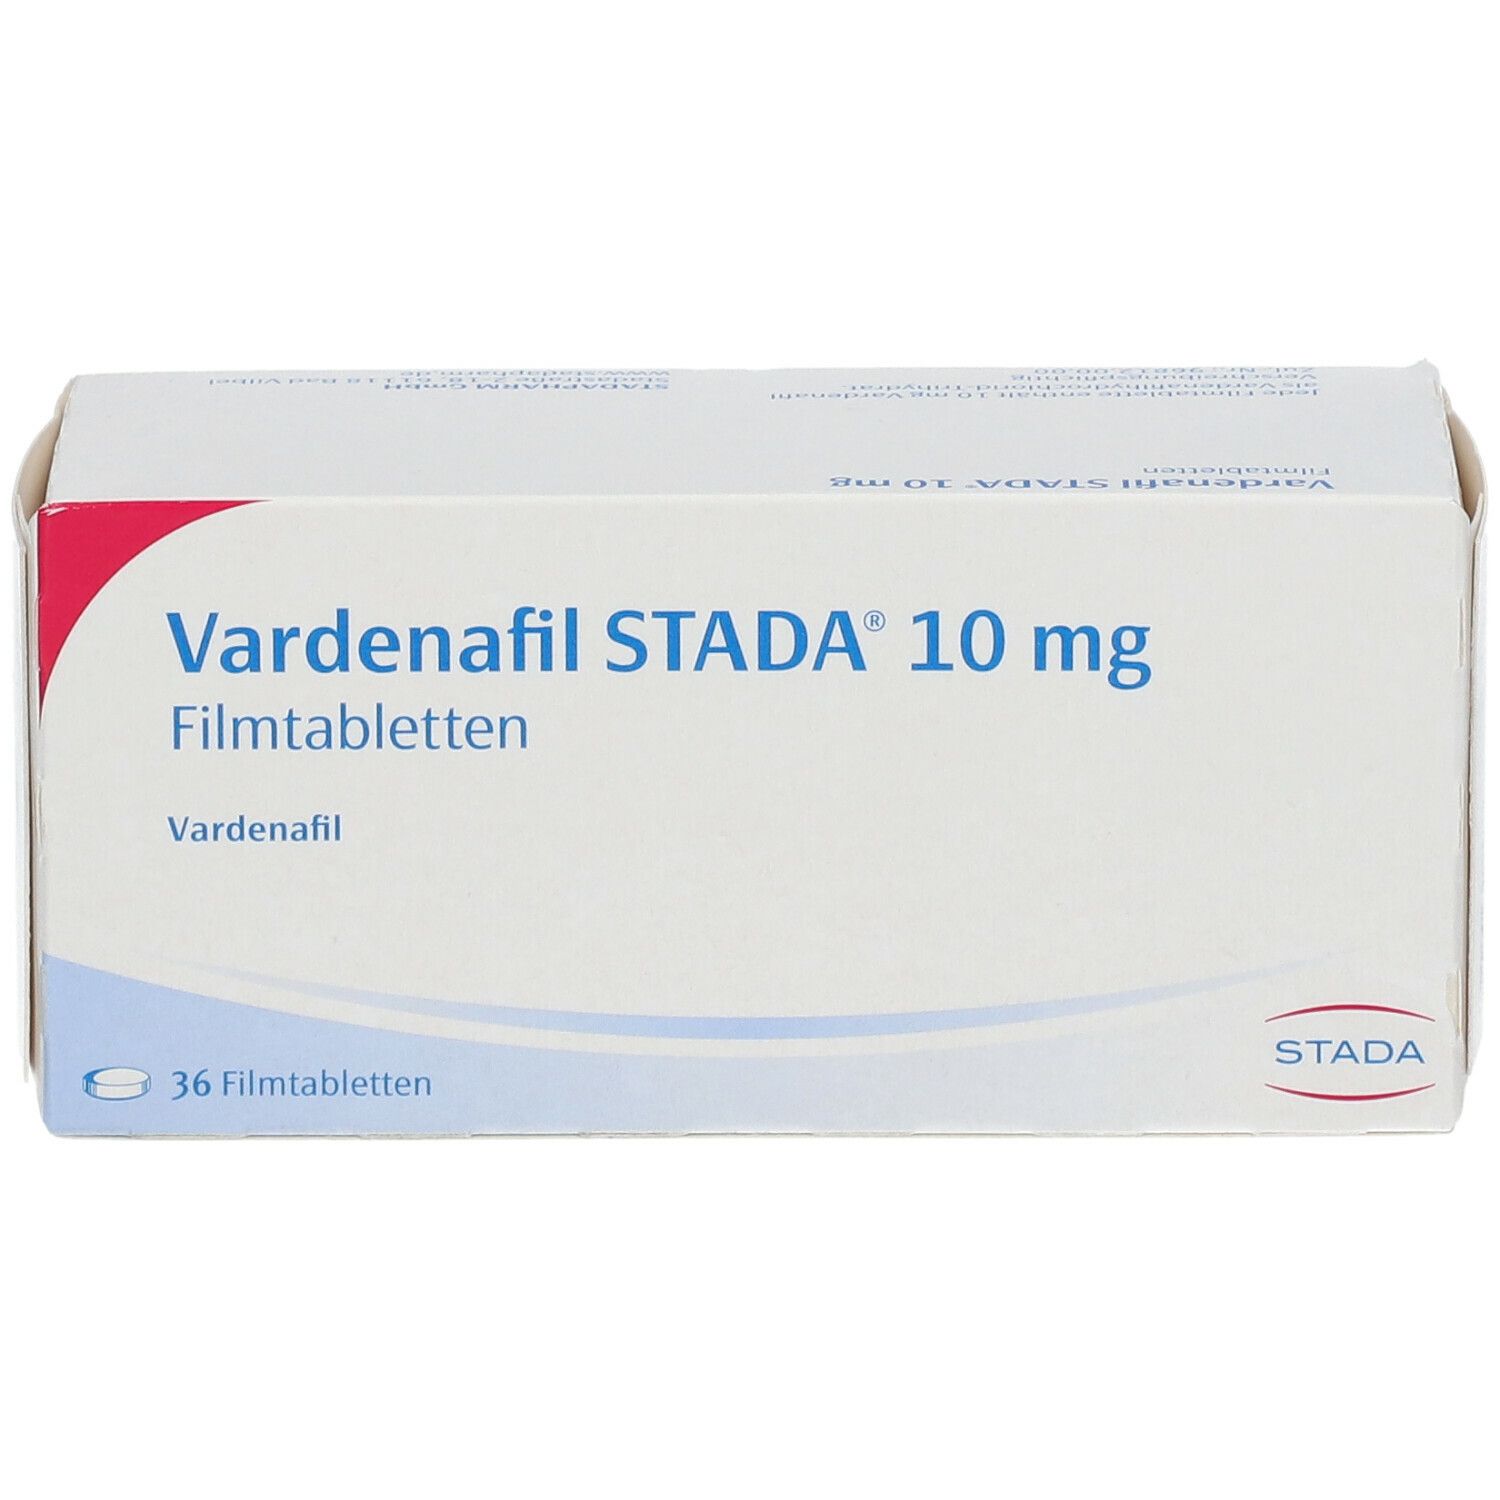 Vardenafil STADA® 10 mg